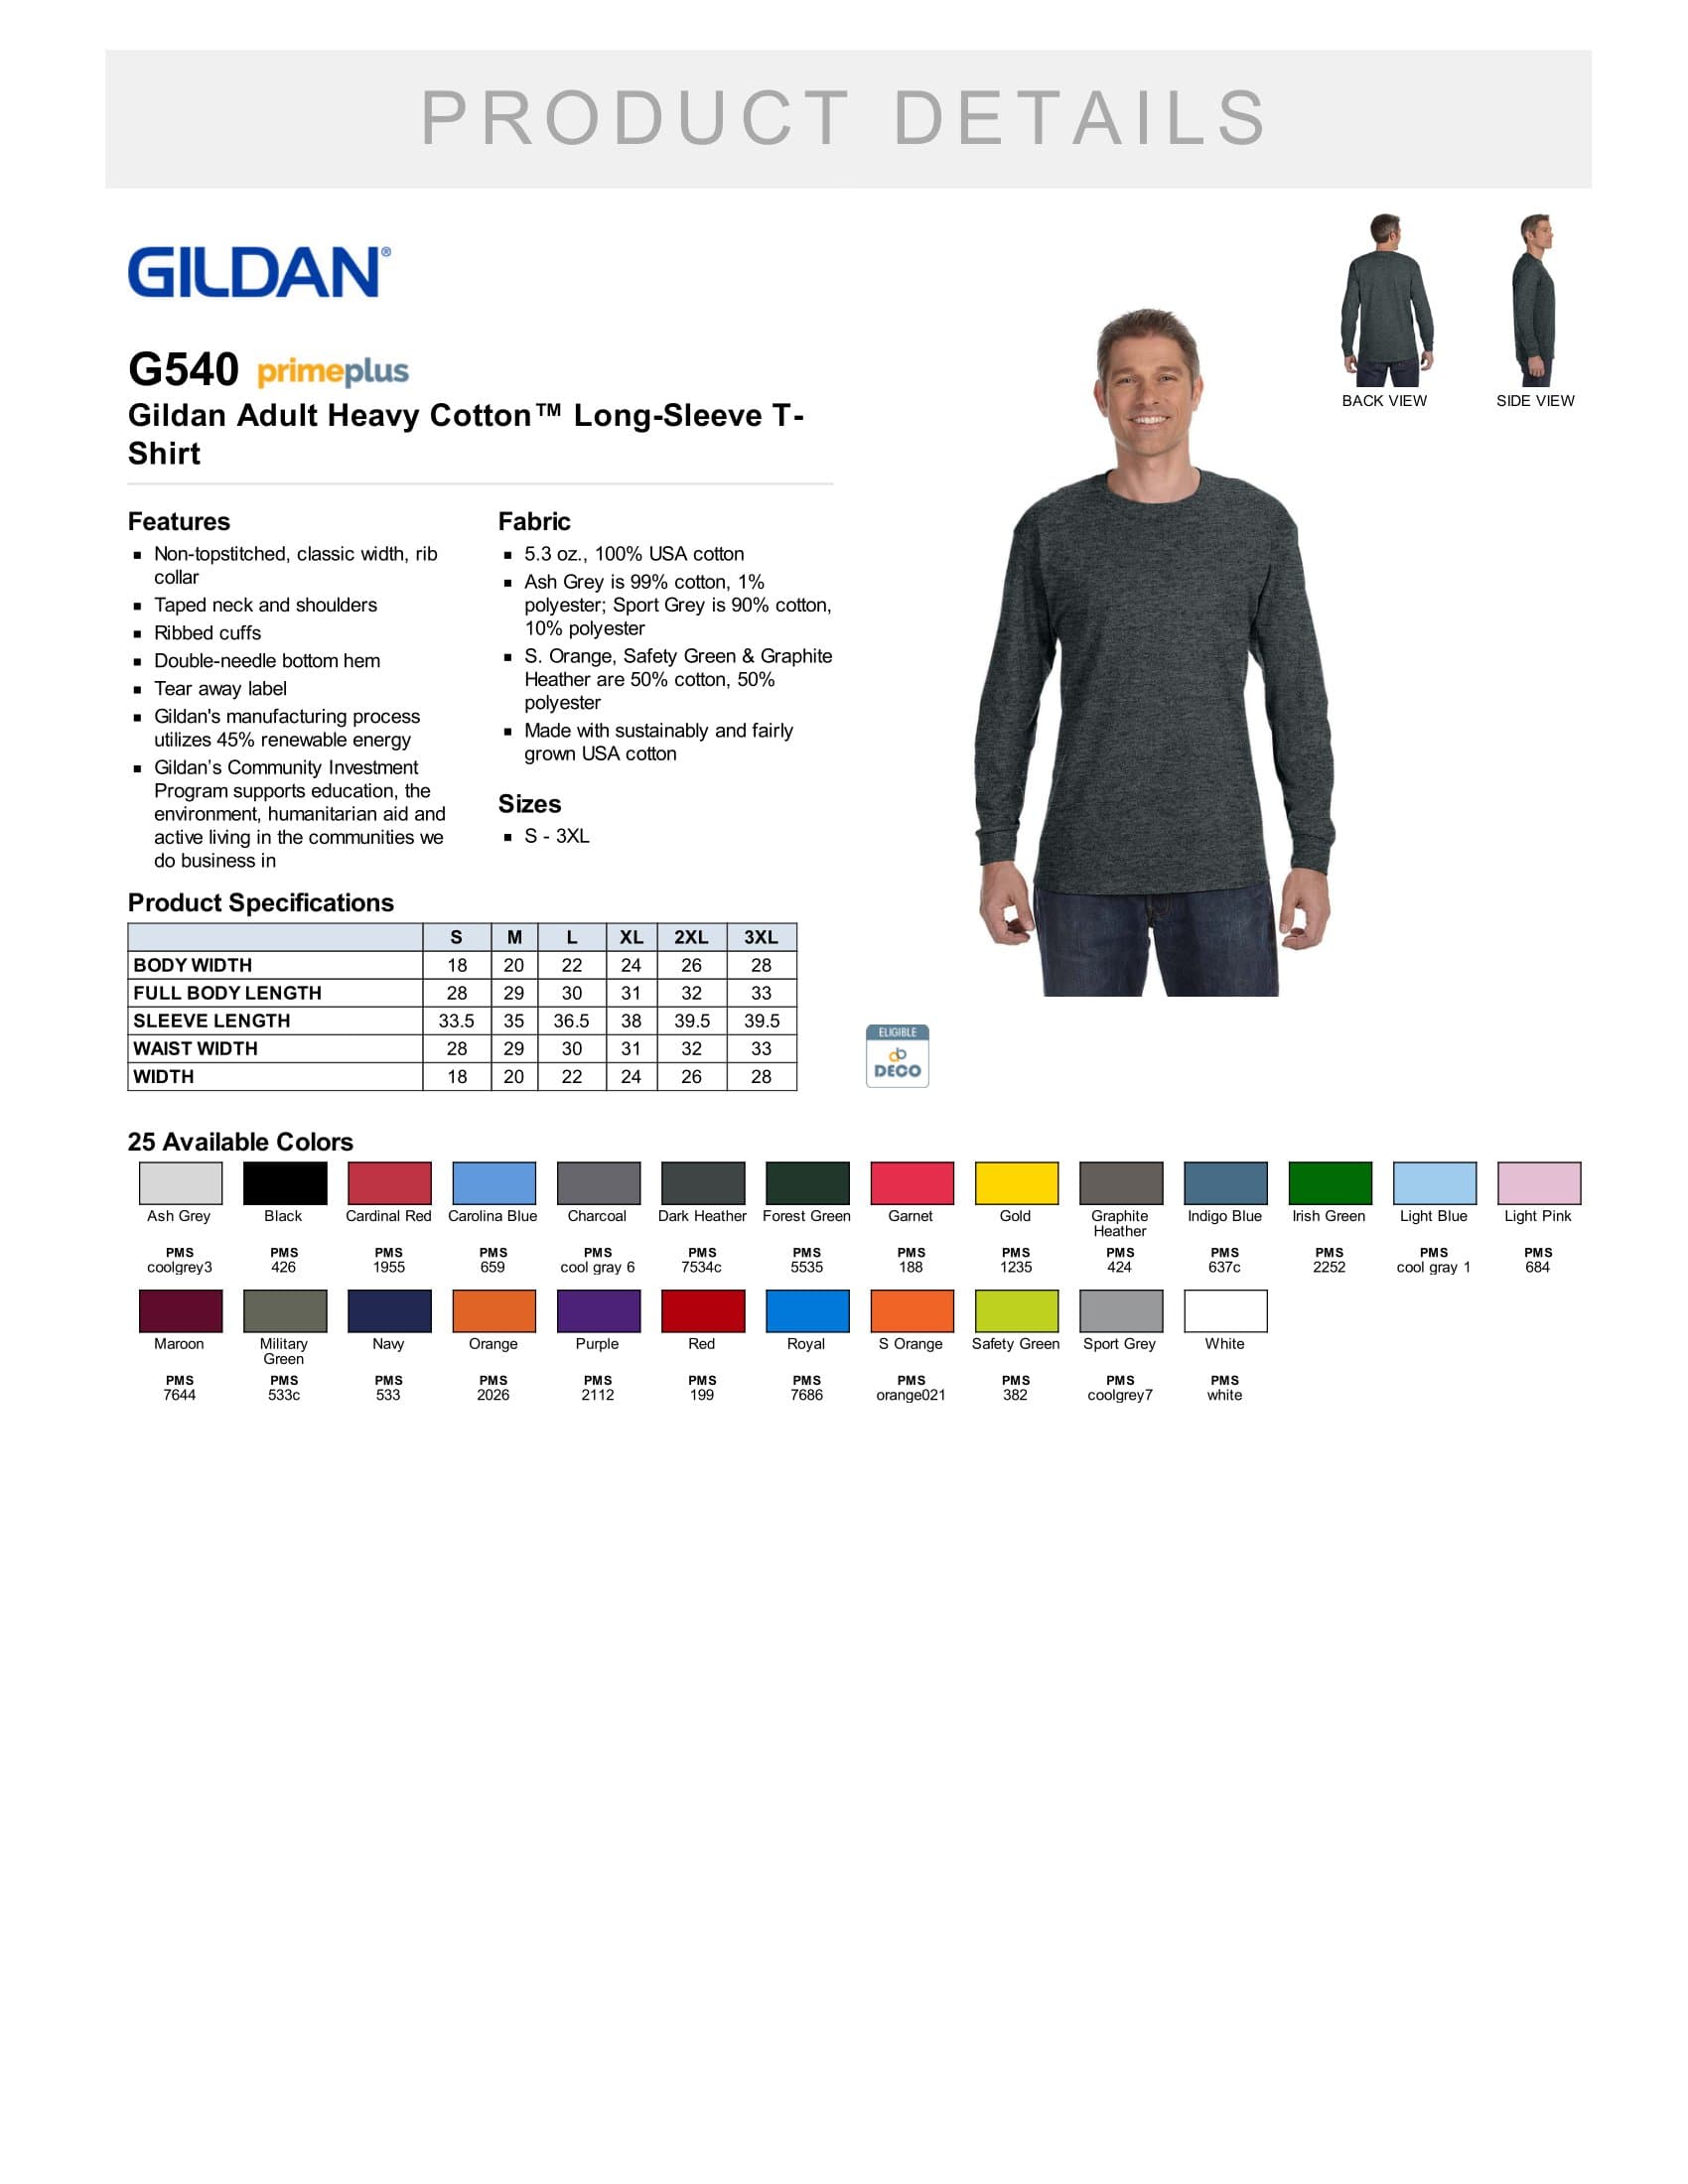 Gildan G540